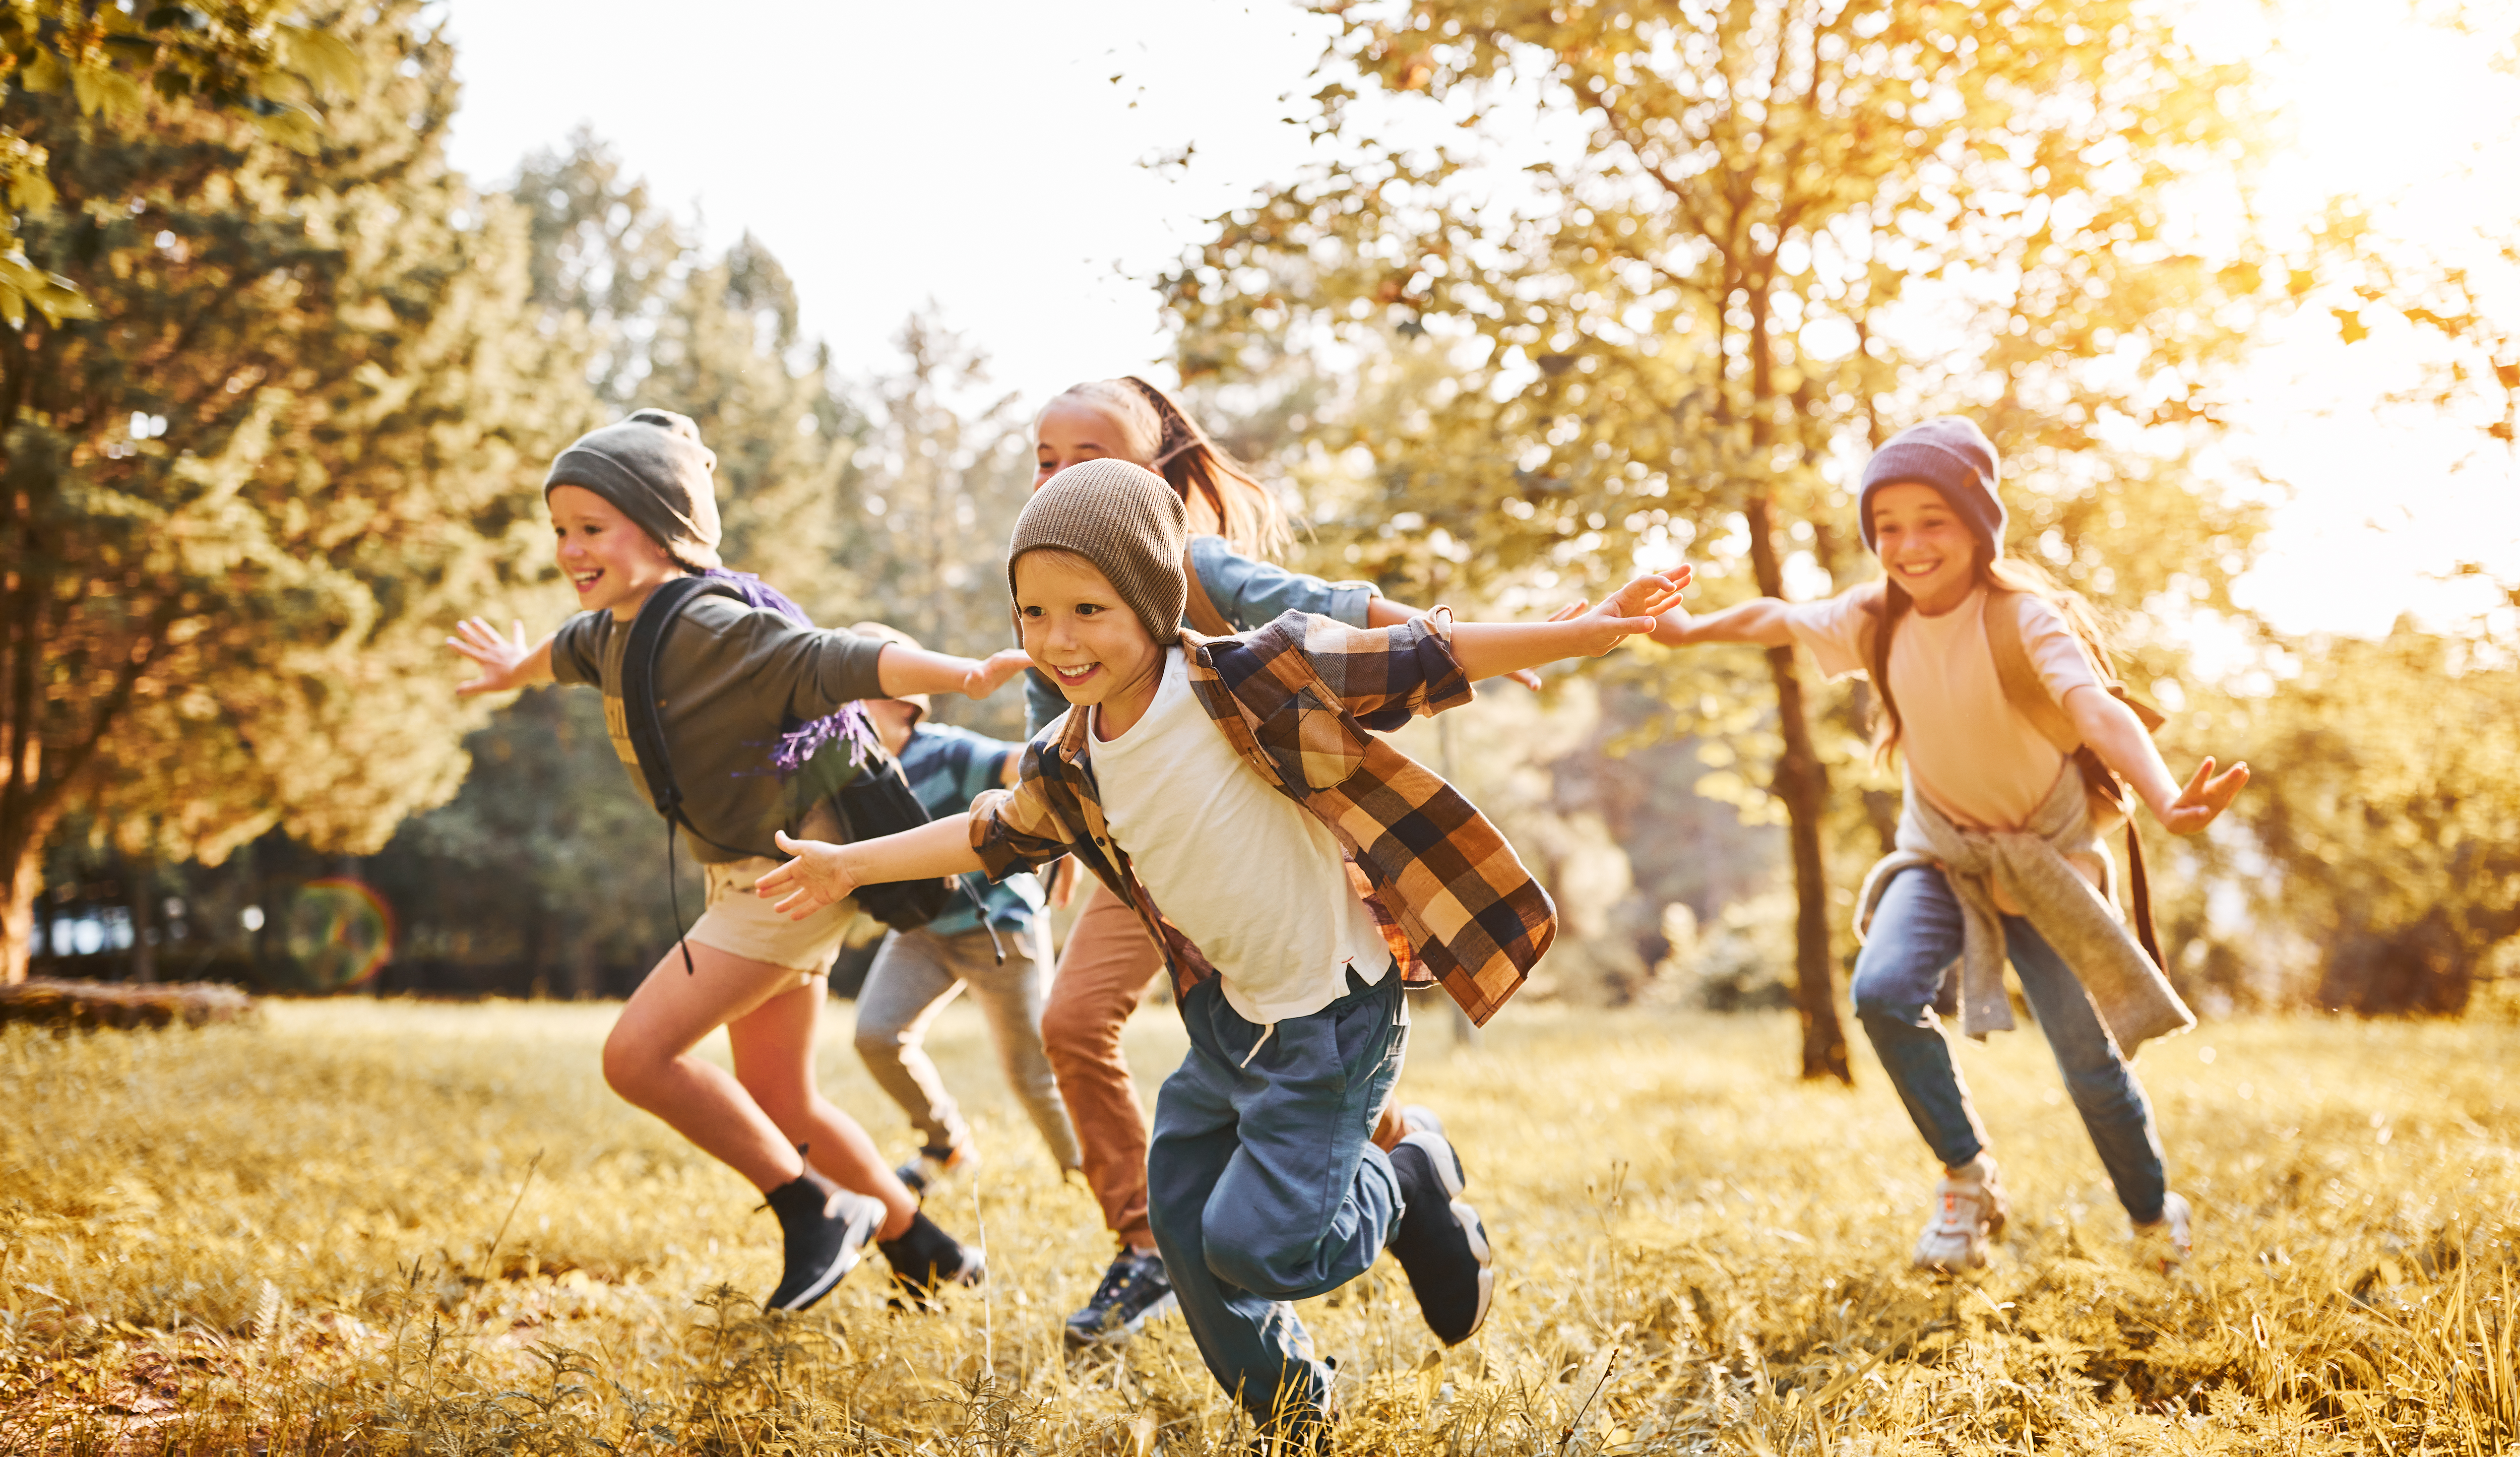 Kids playing | Source: Shutterstock